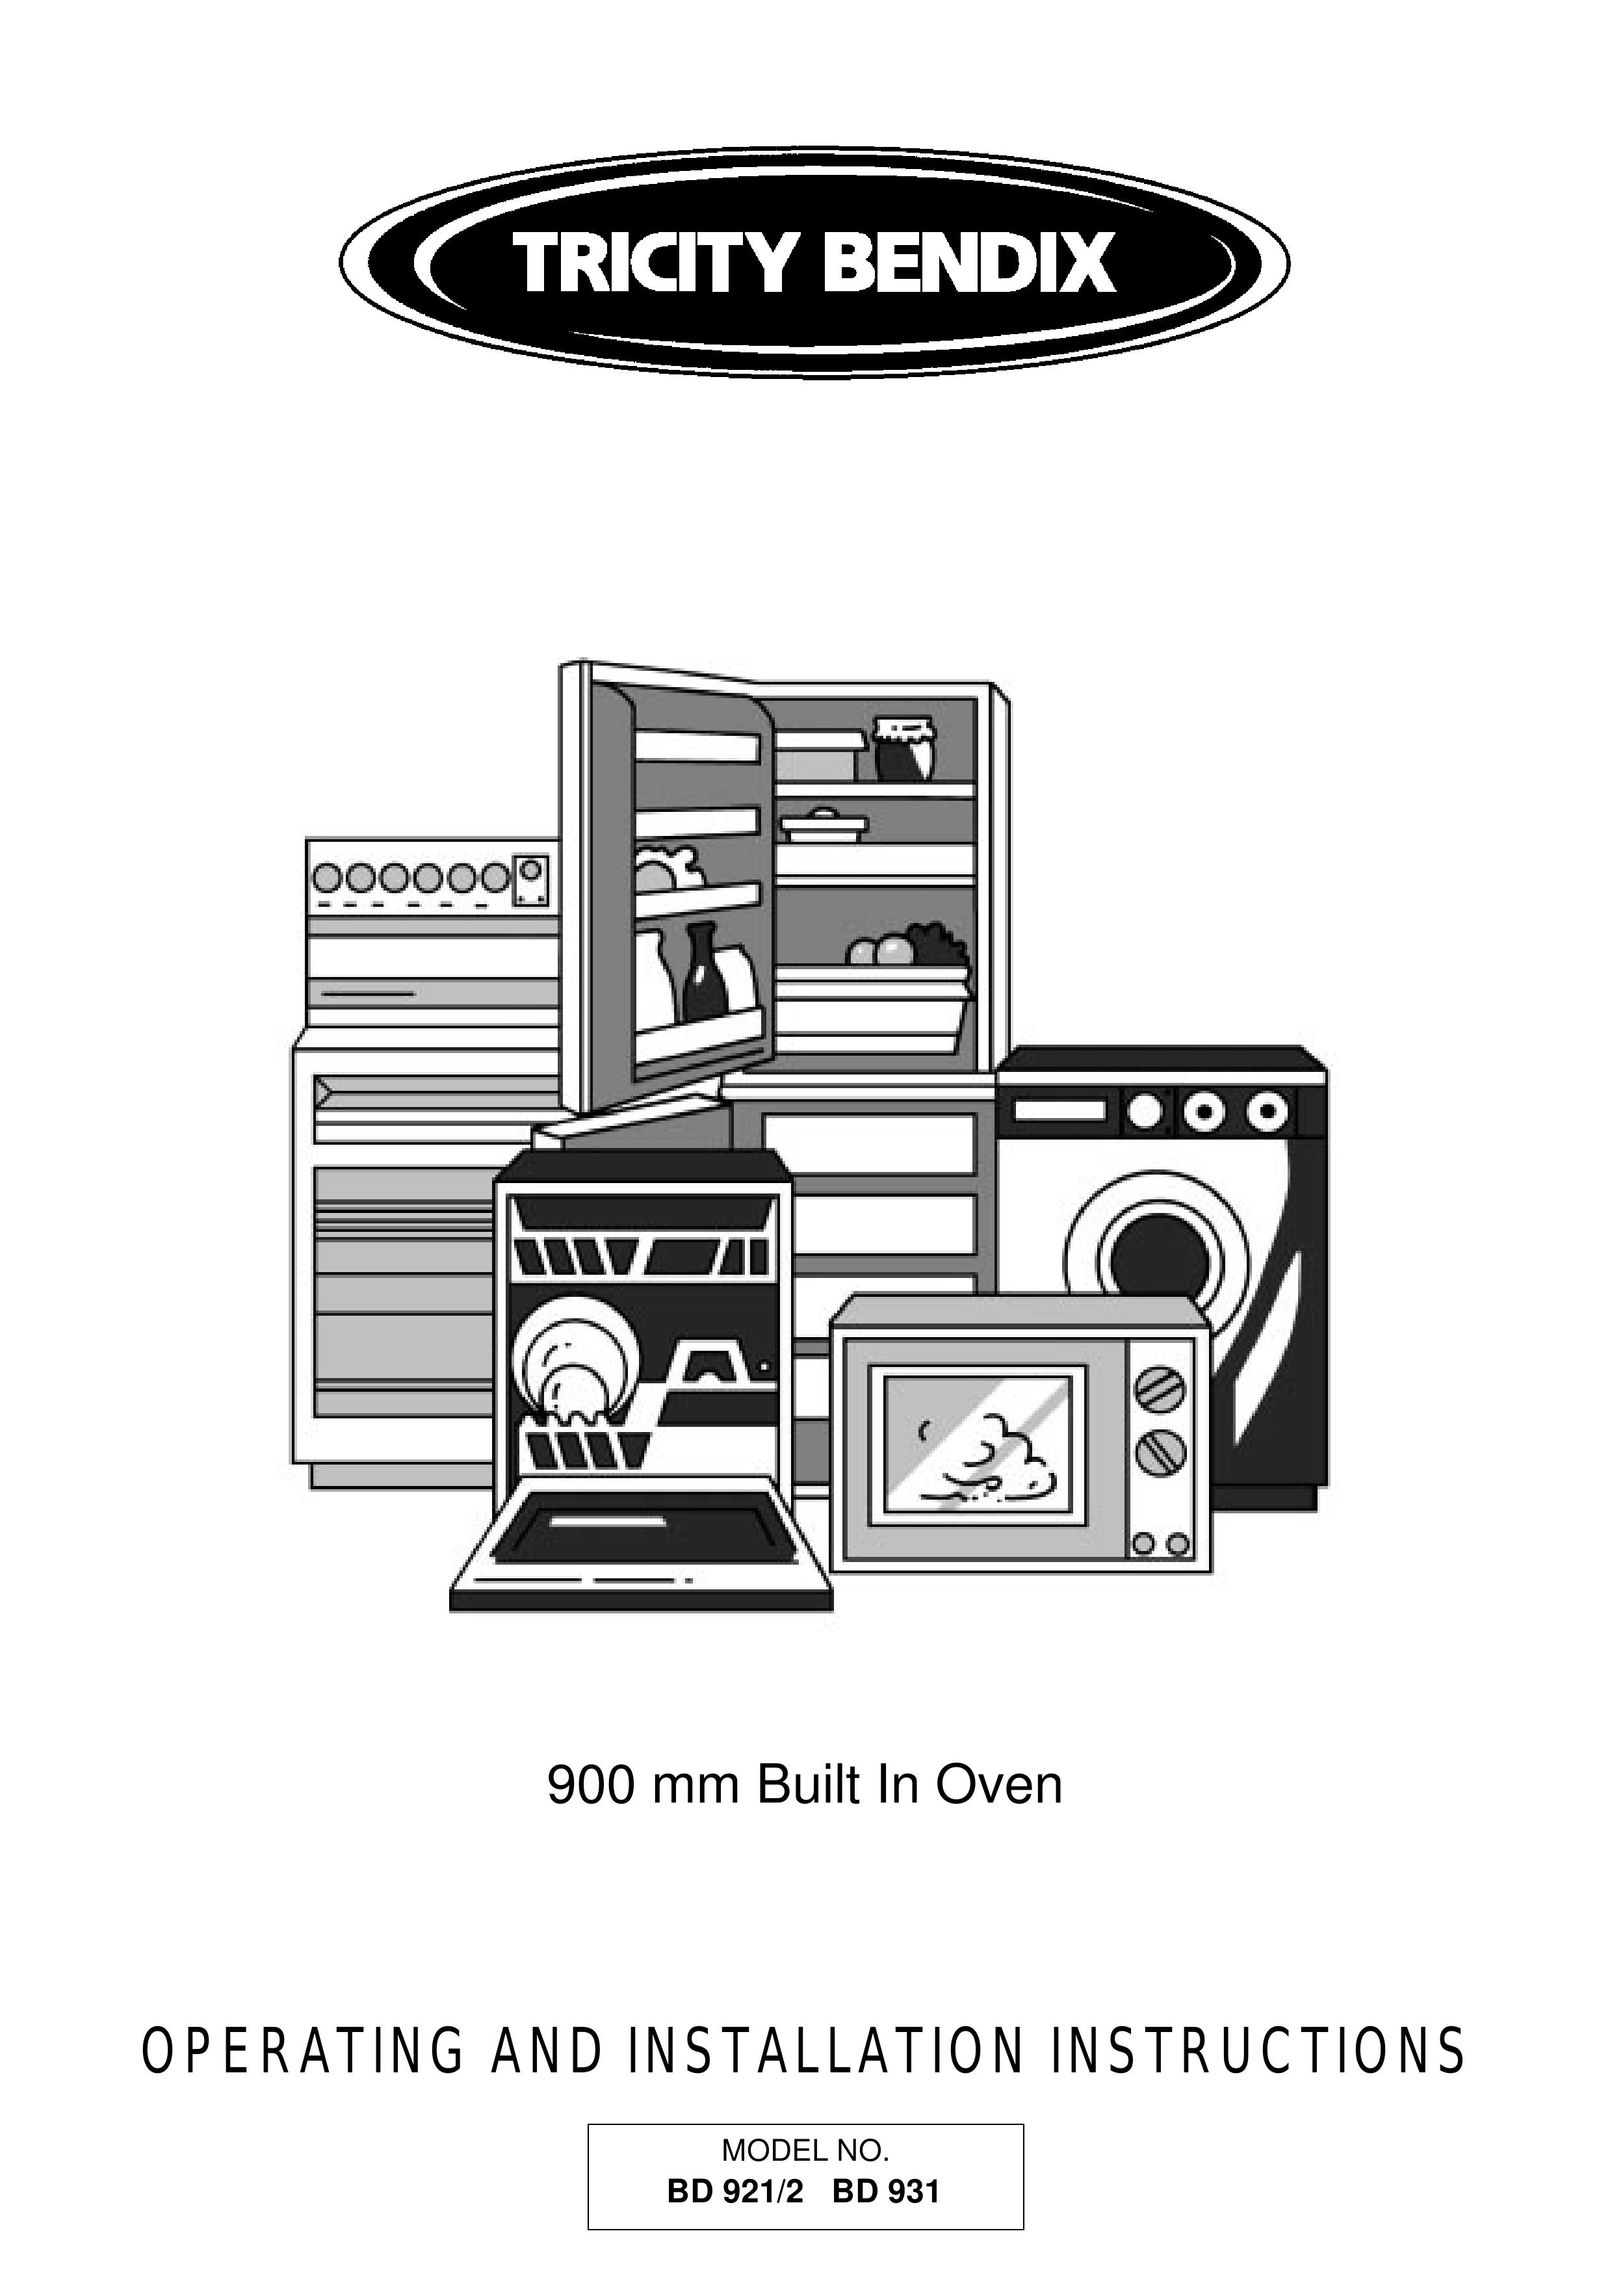 Tricity Bendix BD 931 Oven User Manual